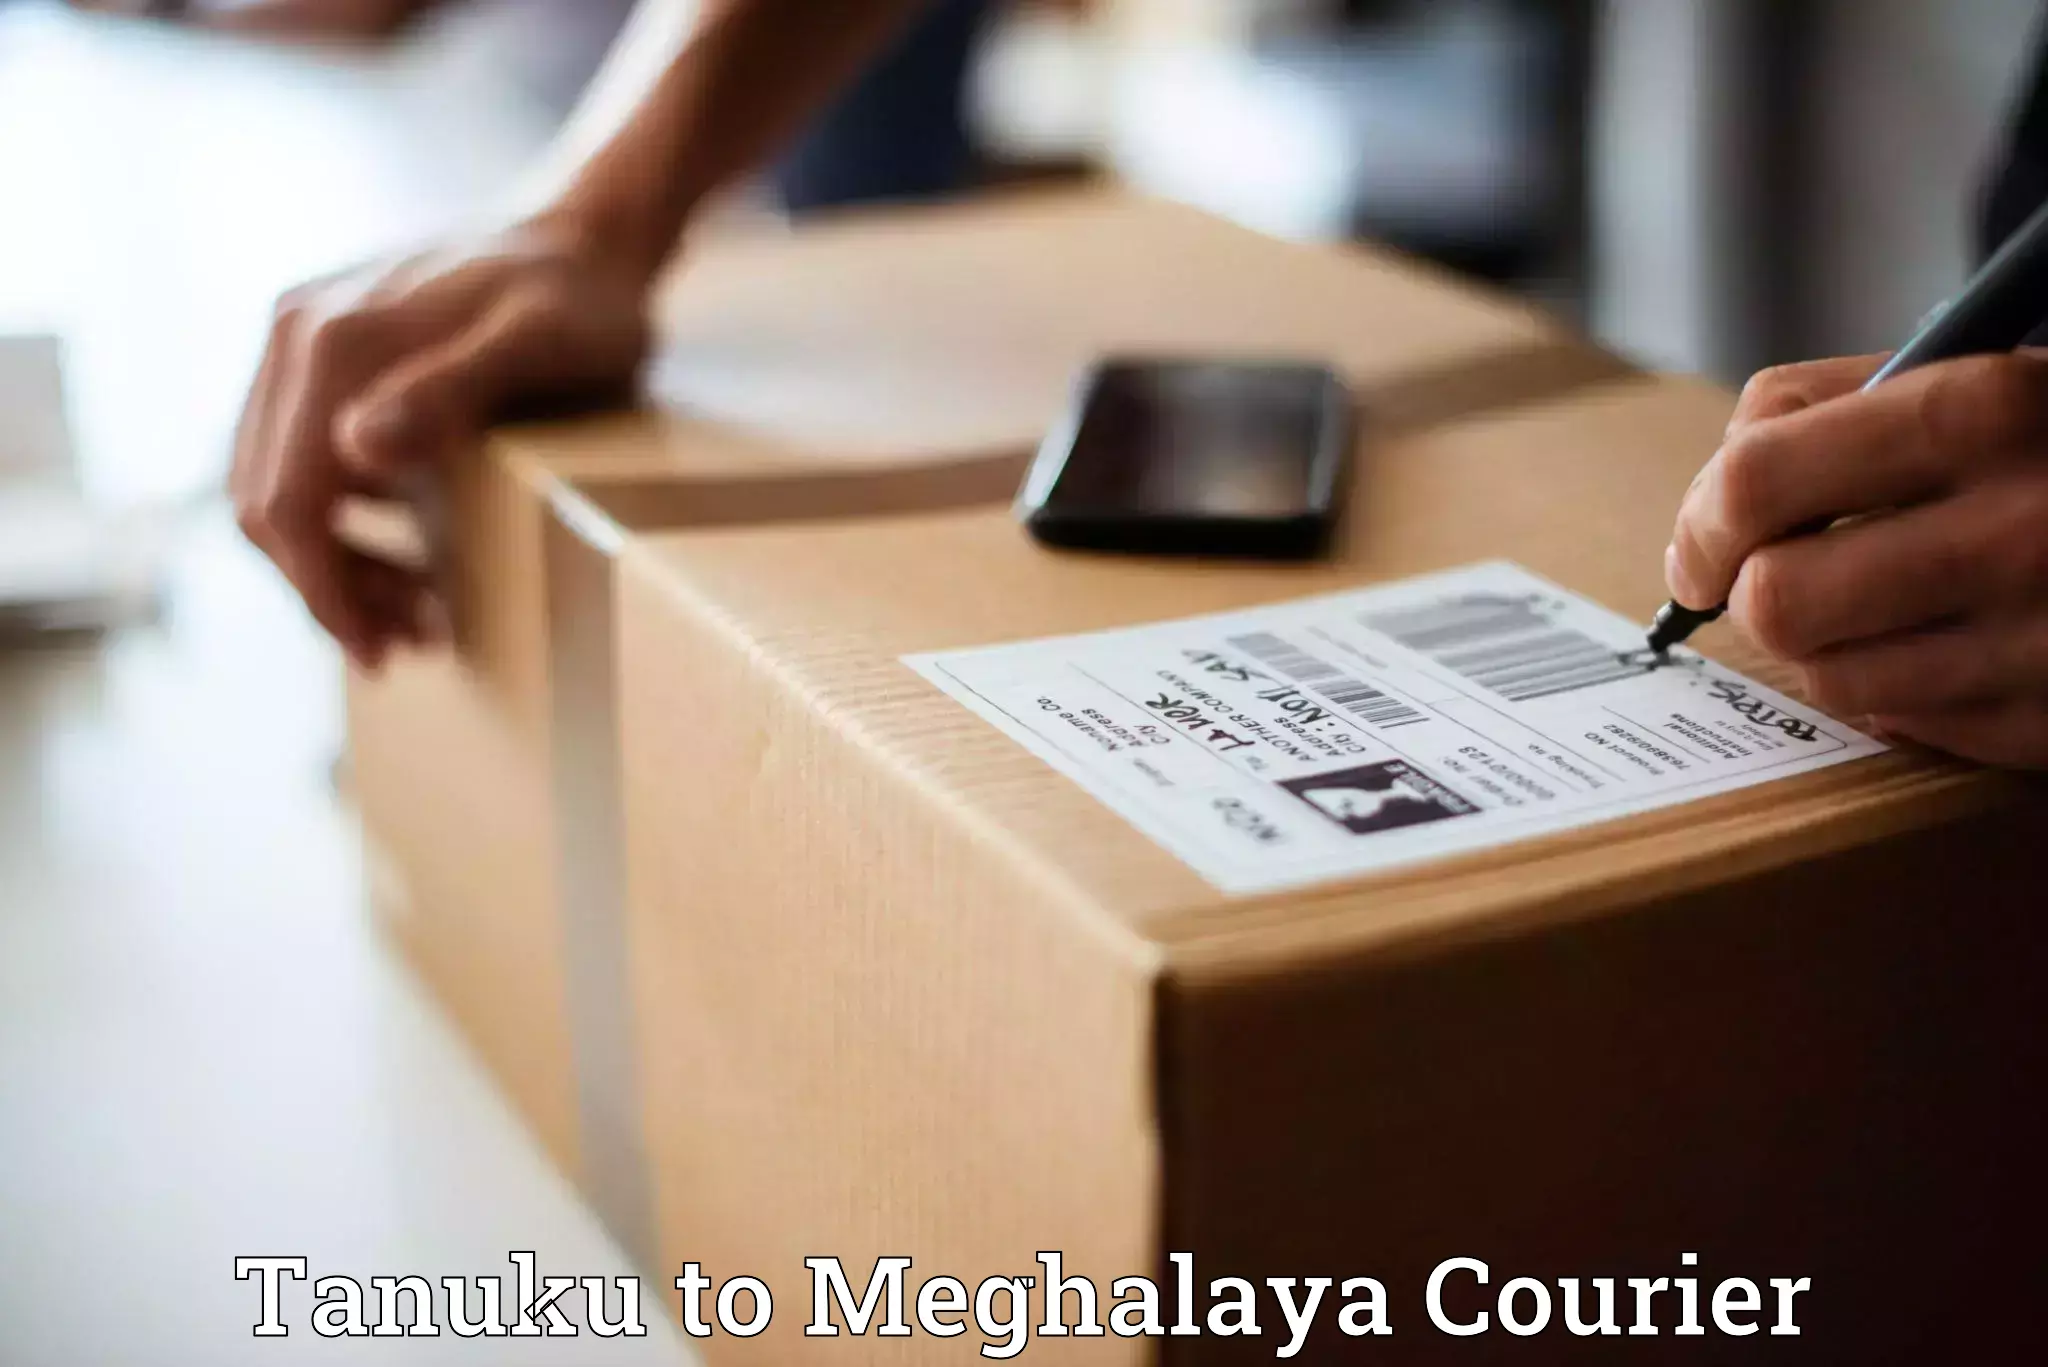 Reliable package handling in Tanuku to Meghalaya